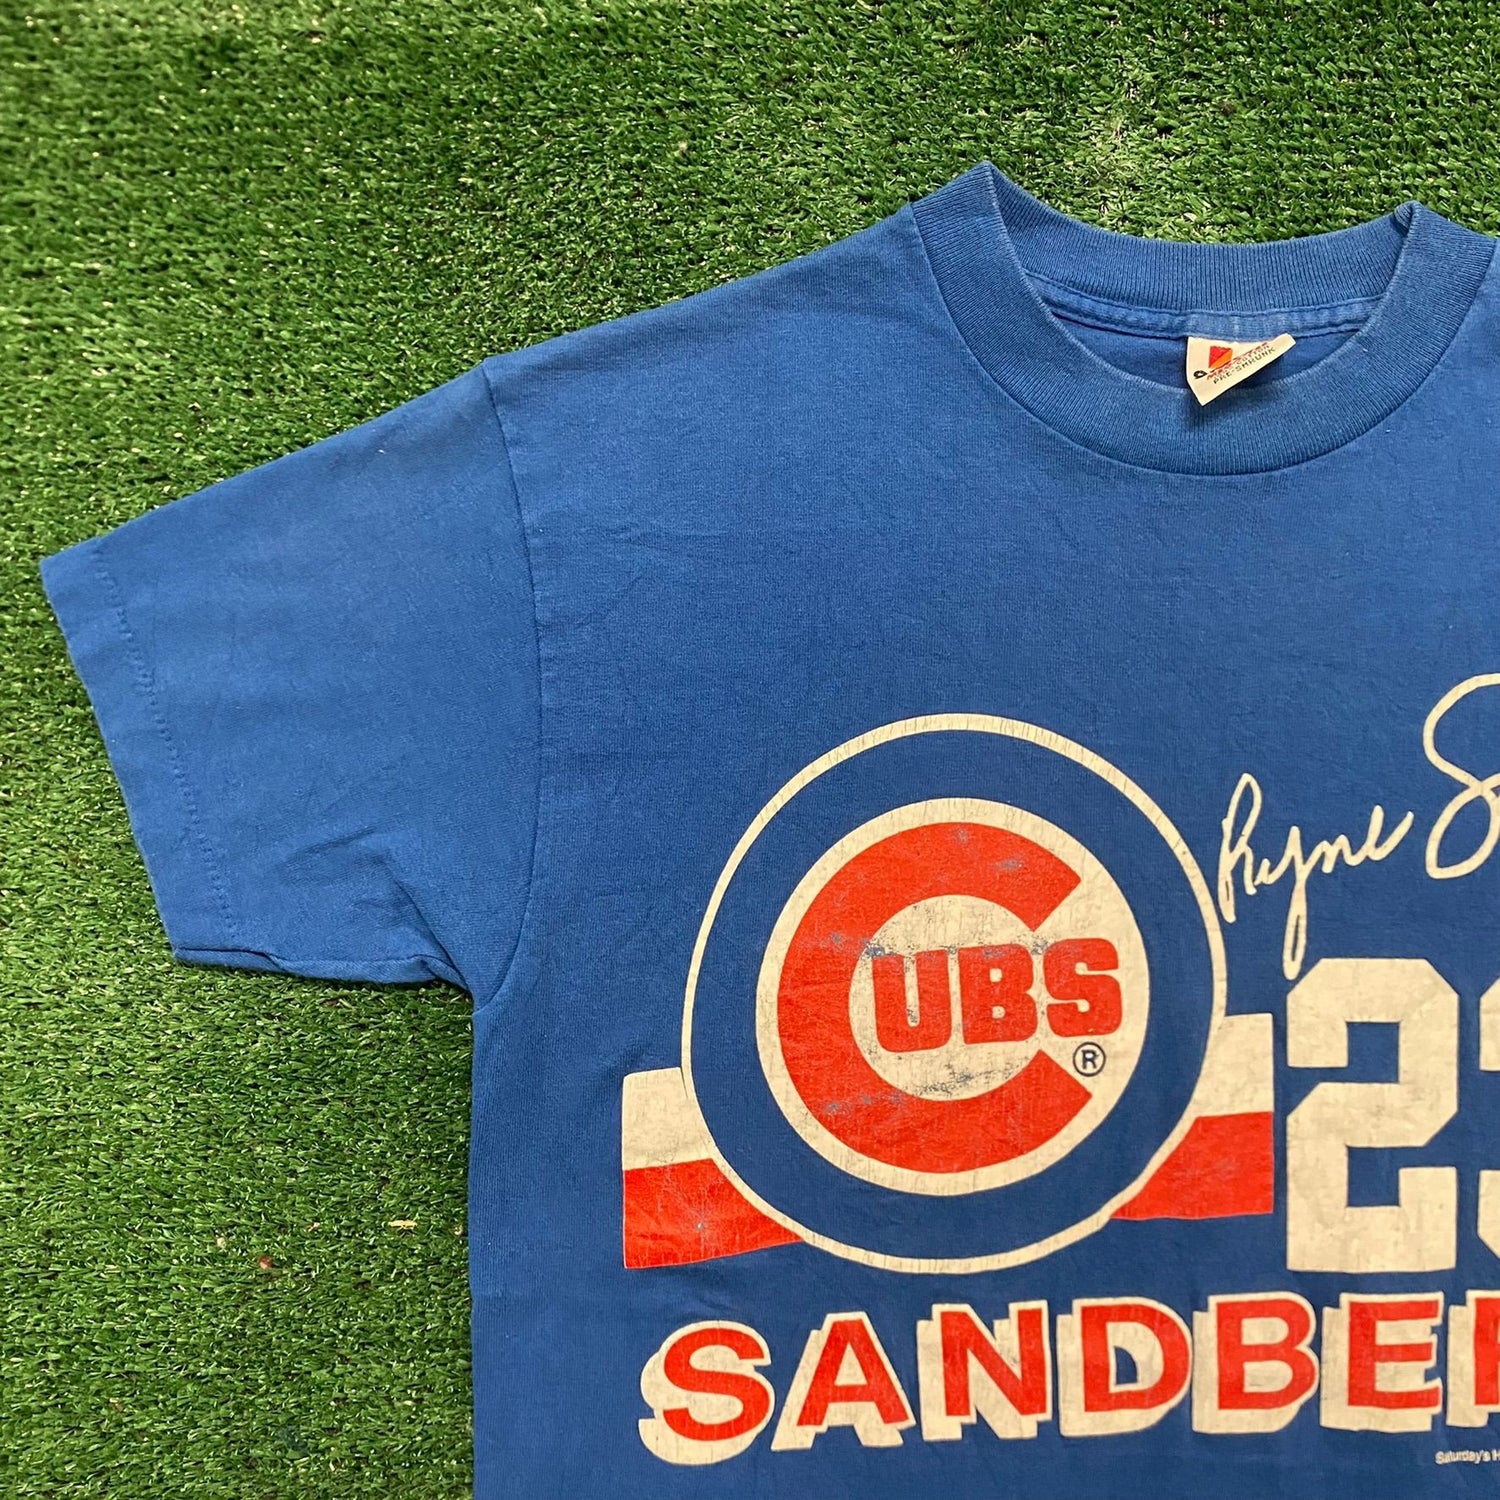 Vintage 1990s Chicago Cubs T-Shirt Size XL